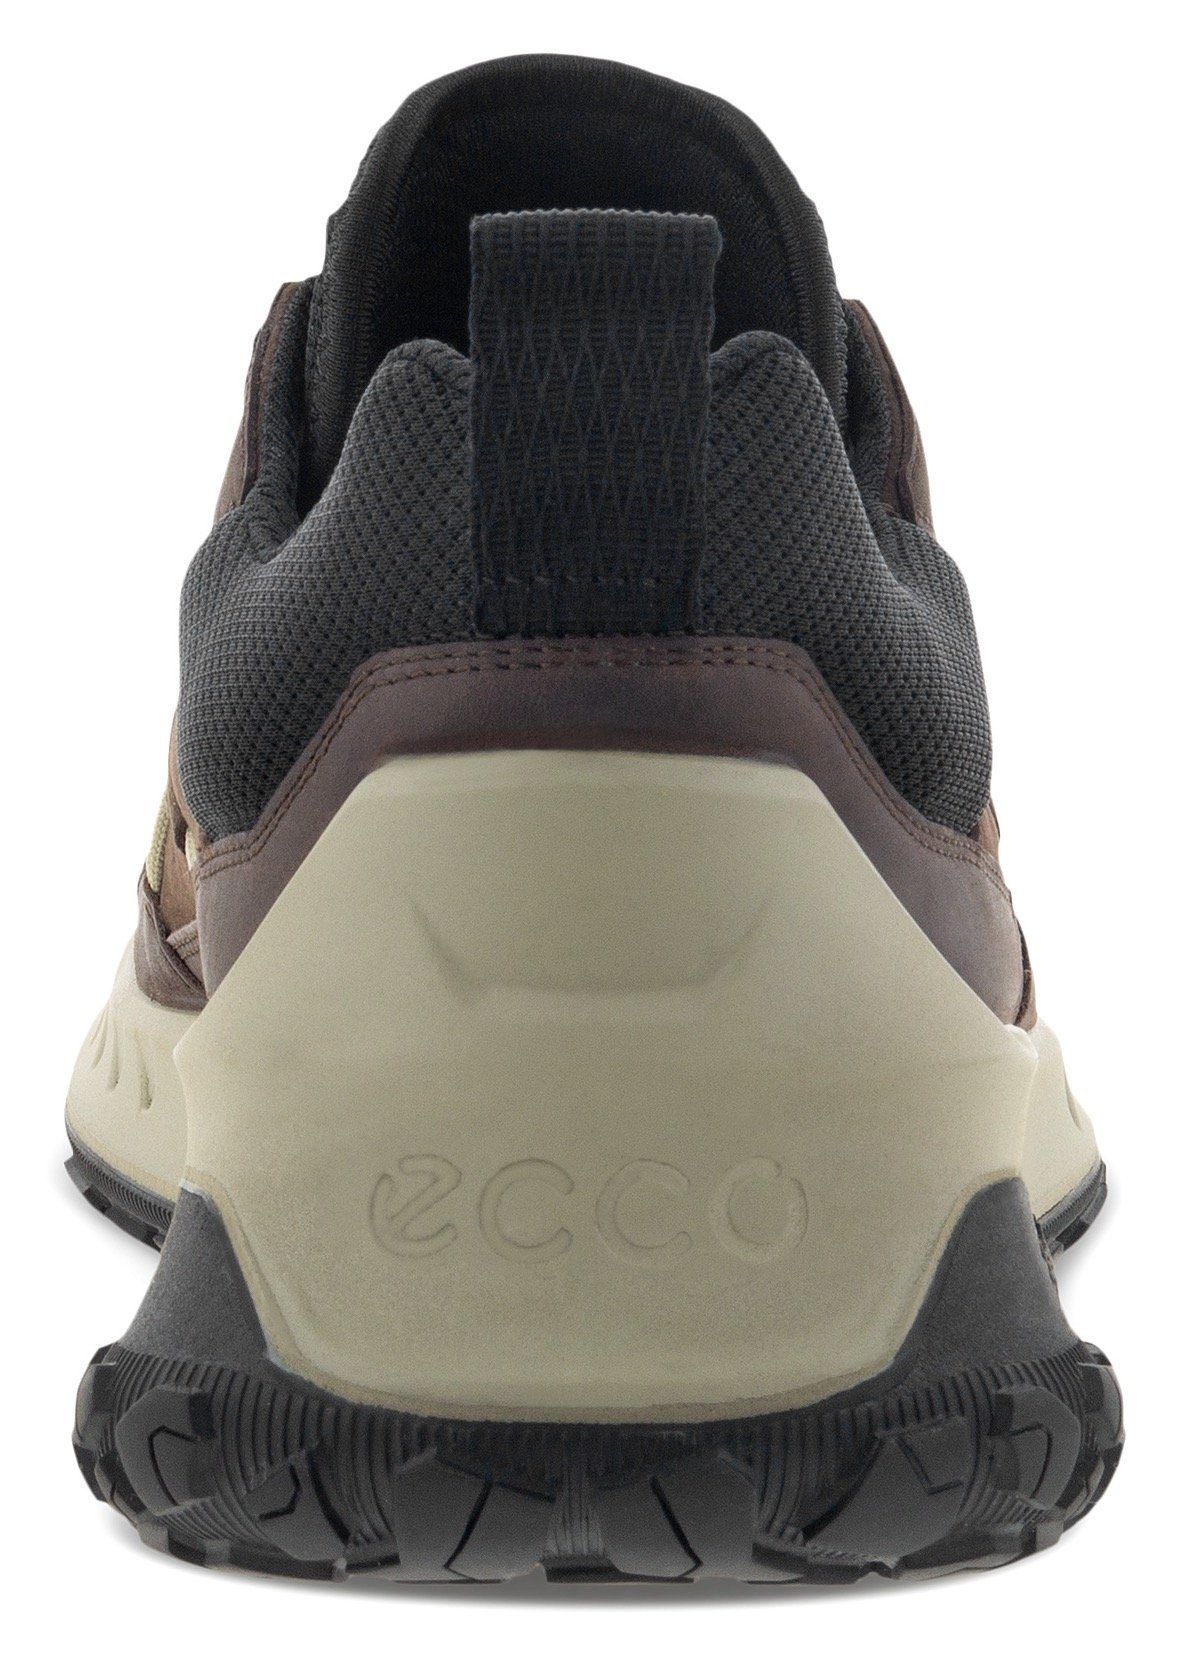 profilierter Ecco dunkelbraun mit Sneaker Michelin-Laufsohle ULT-TRN M